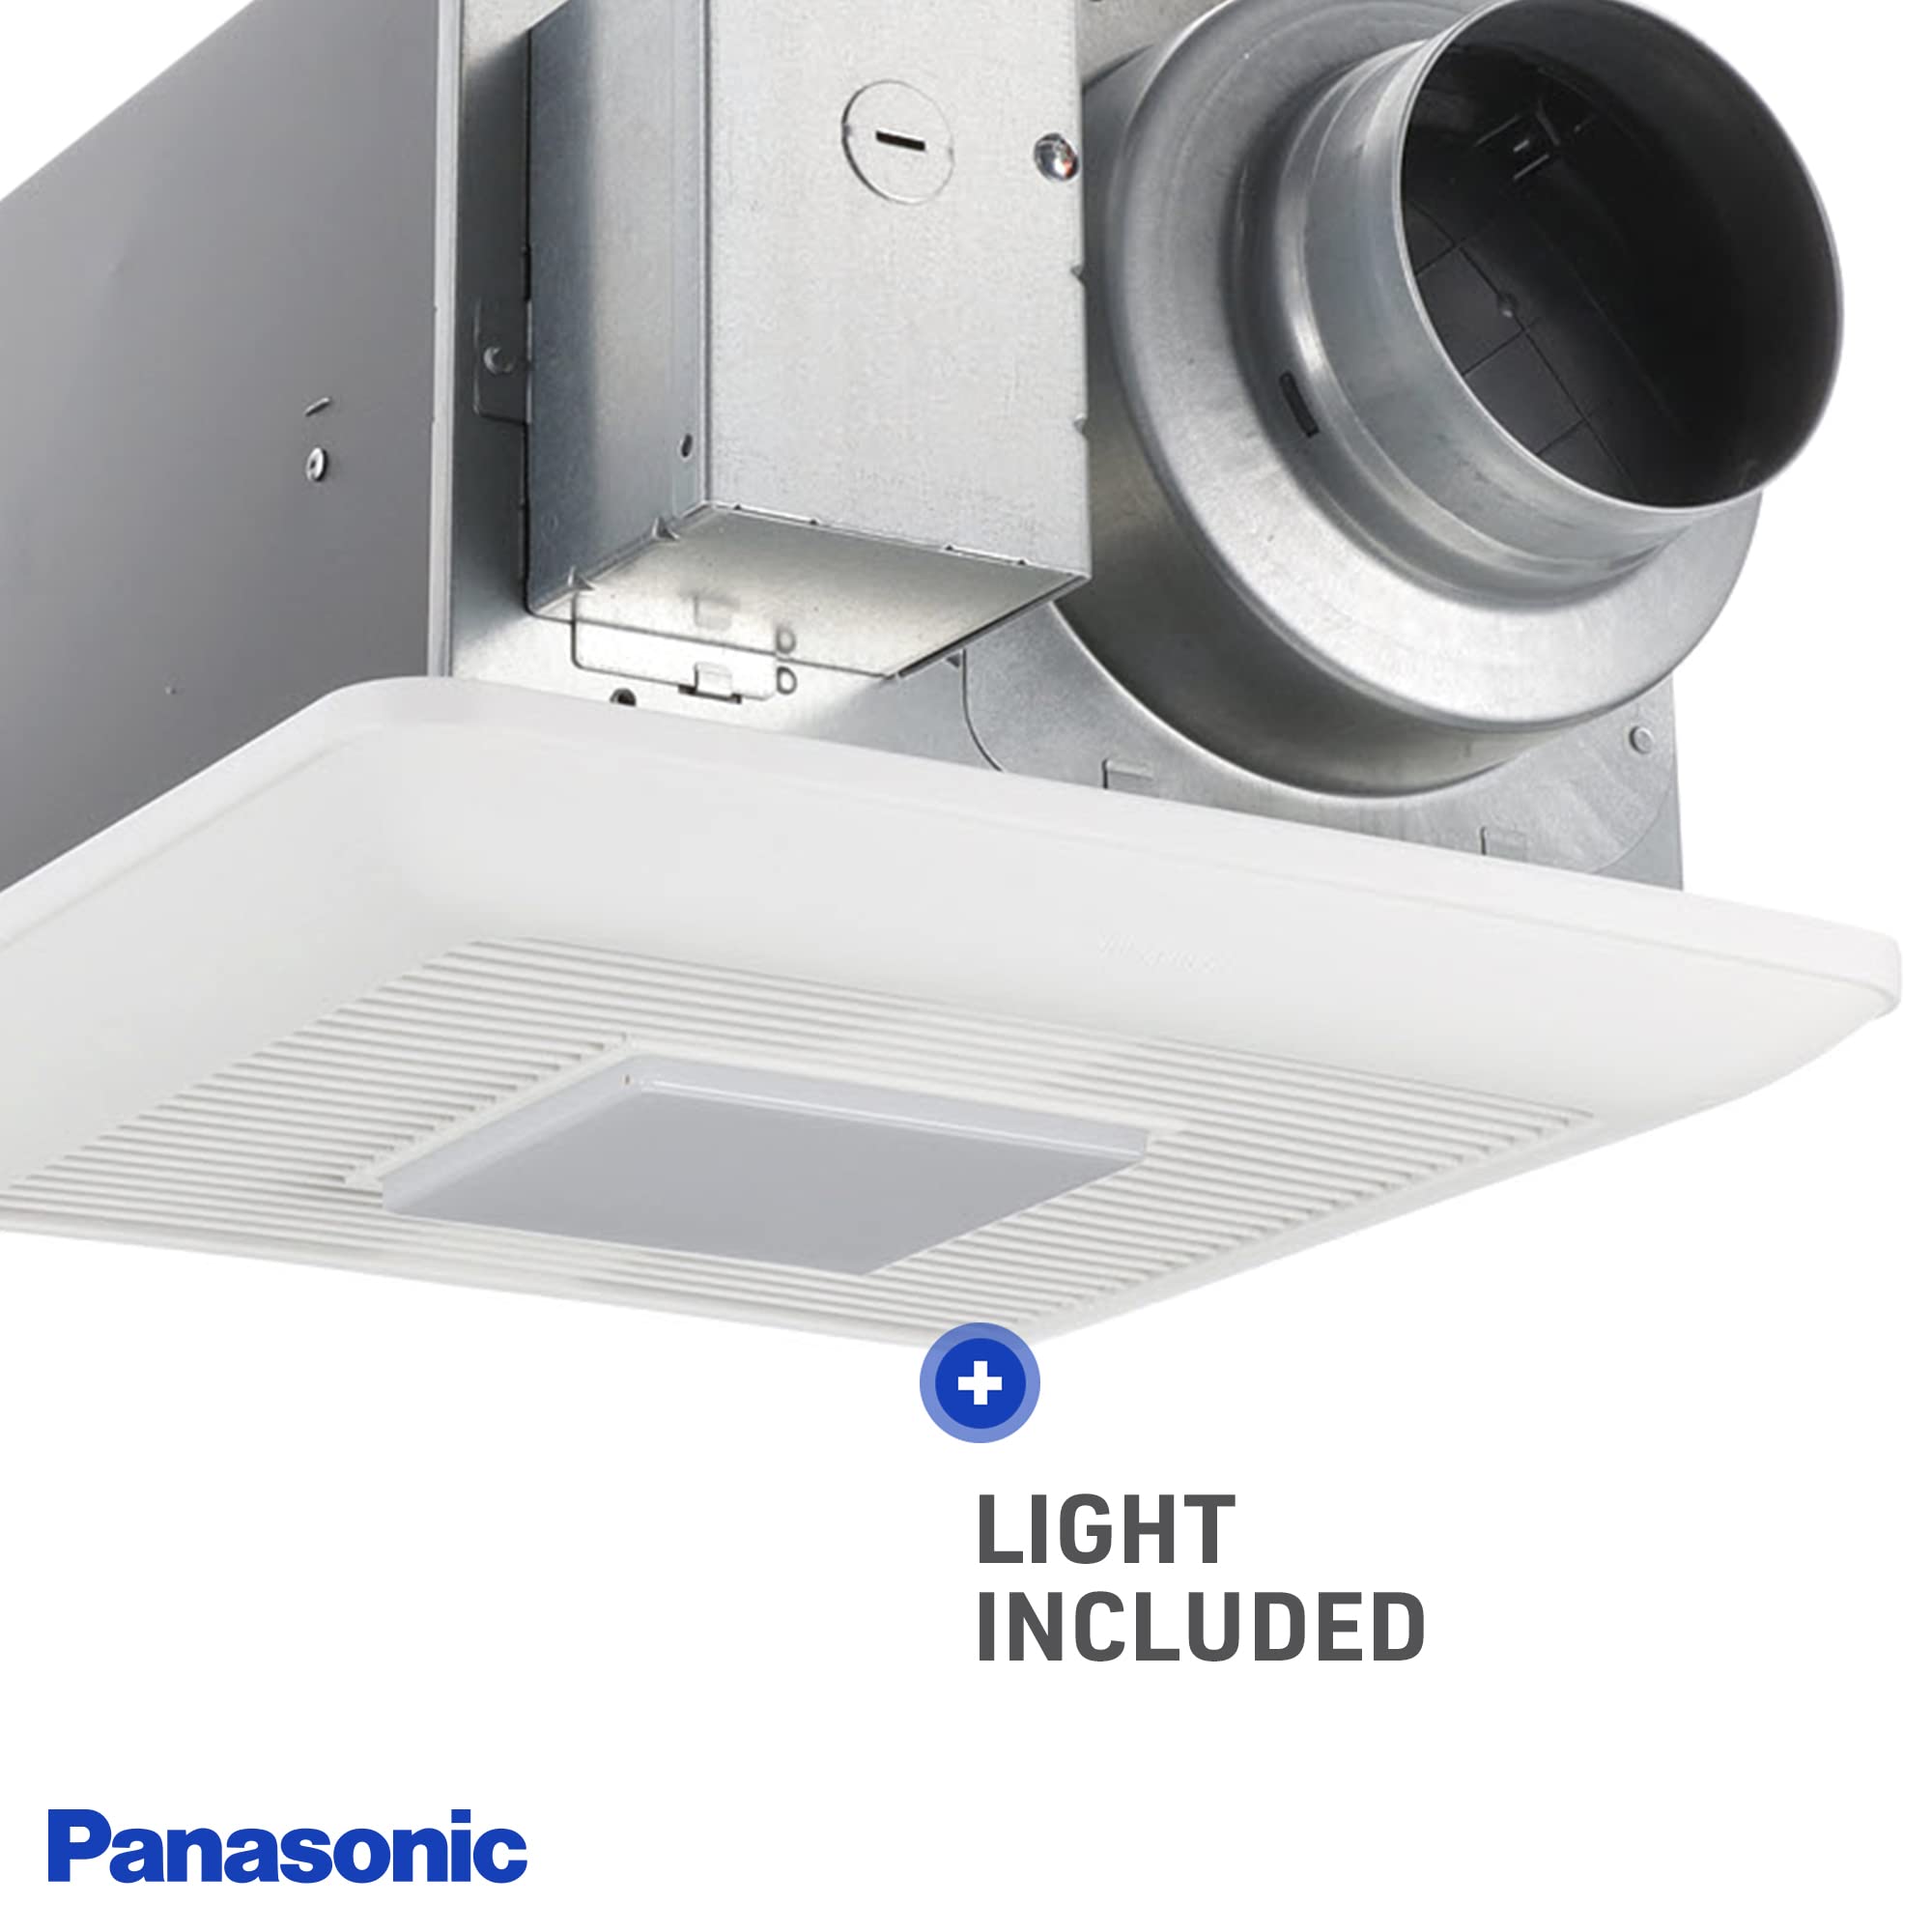 Panasonic FV-0511VQL1 WhisperCeiling DC Ventilation Fan with LED Light - 50-80-110 CFM - Quiet Bathroom Ceiling Fan